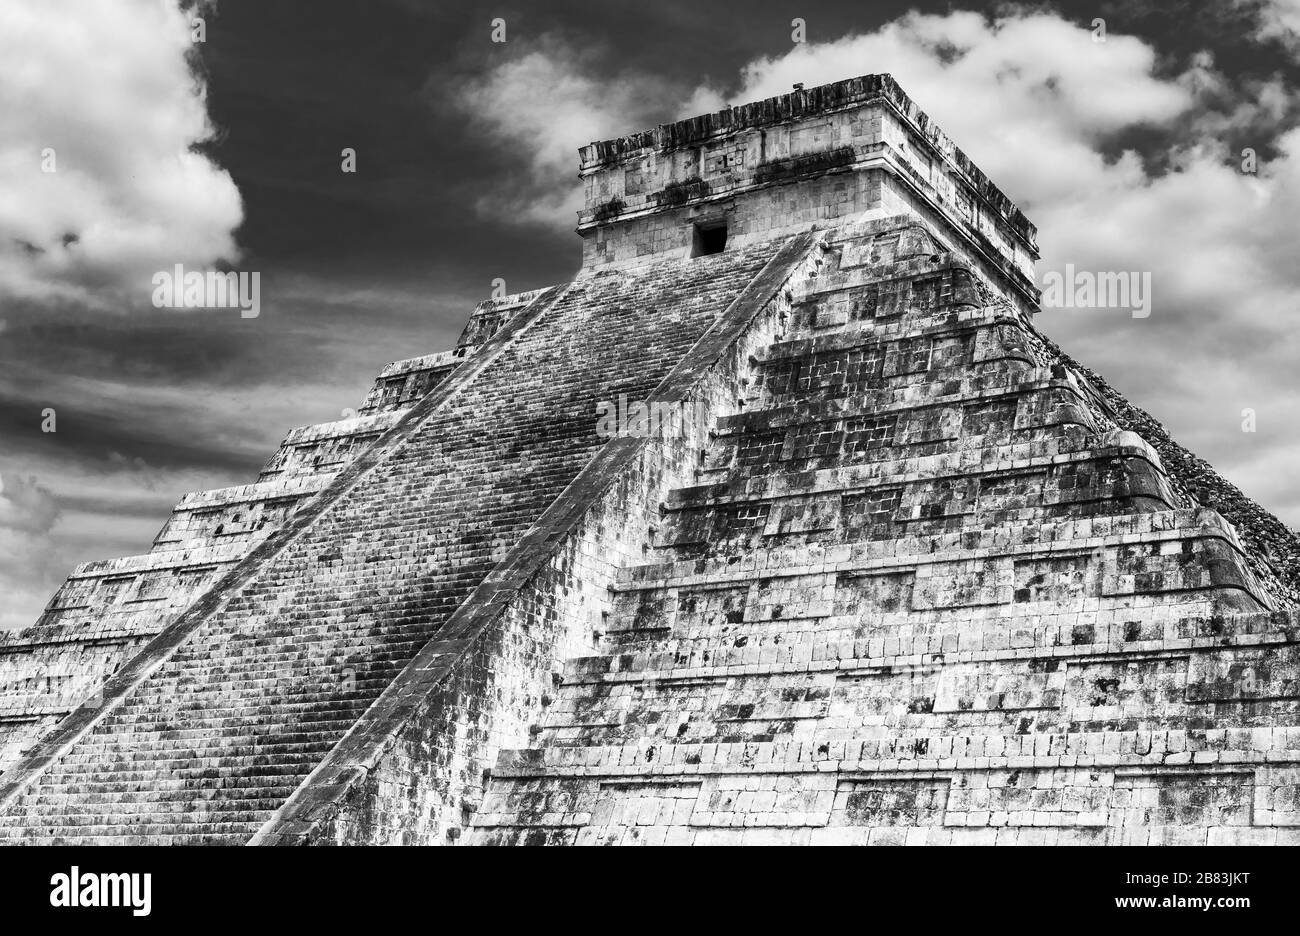 The Mayan Pyramid of Kukulkan or El Castillo in black and white near Merida and Cancun, Yucatan Peninsula, Mexico. Stock Photo